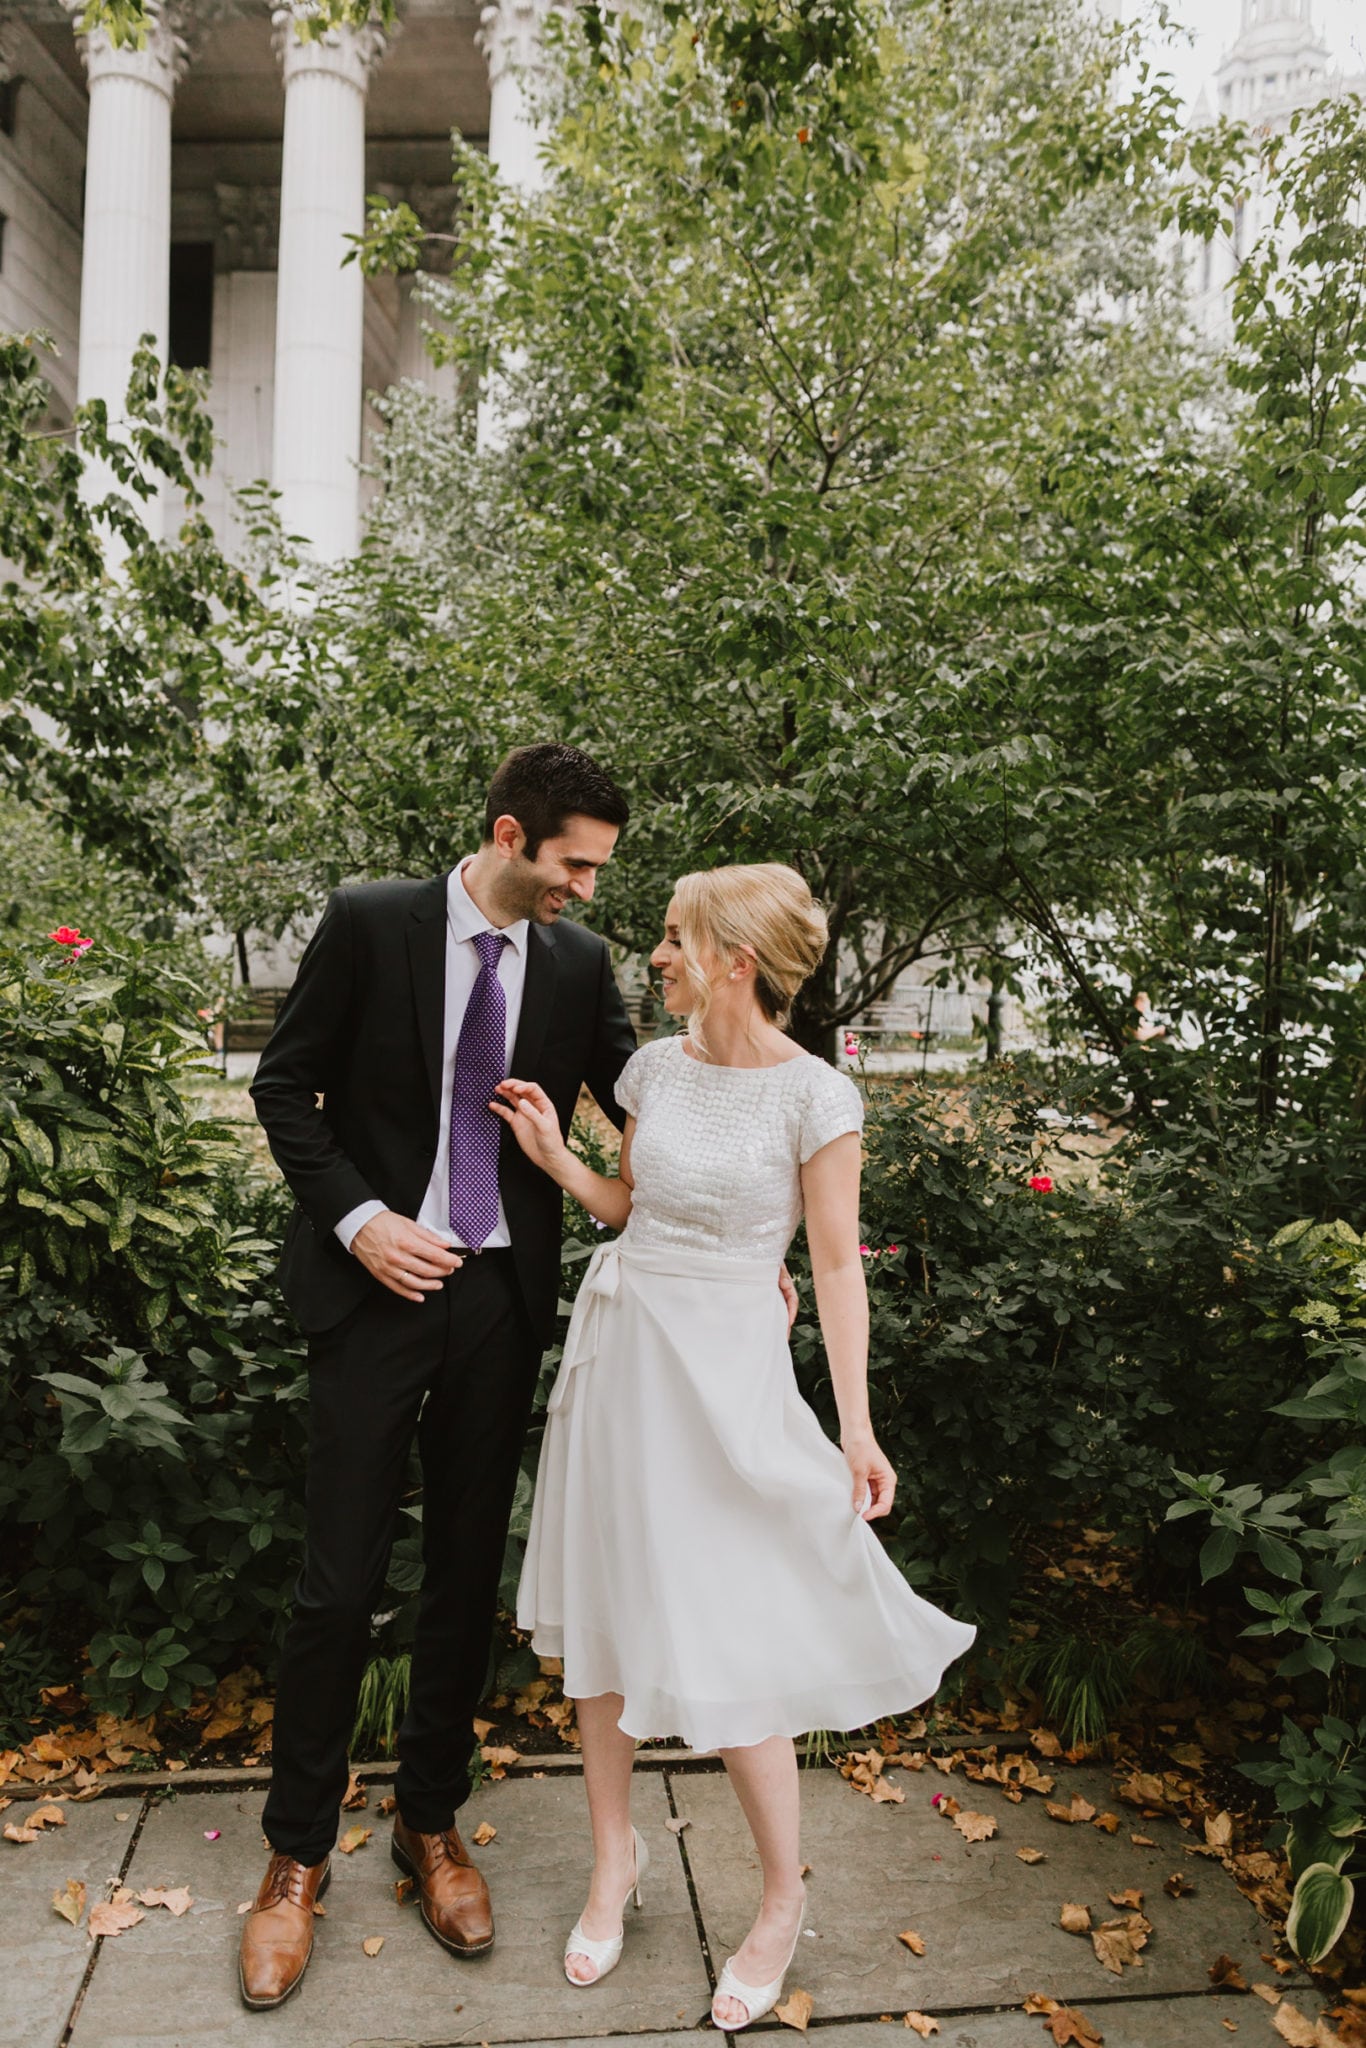 NYC City Hall wedding photos in wedding garden